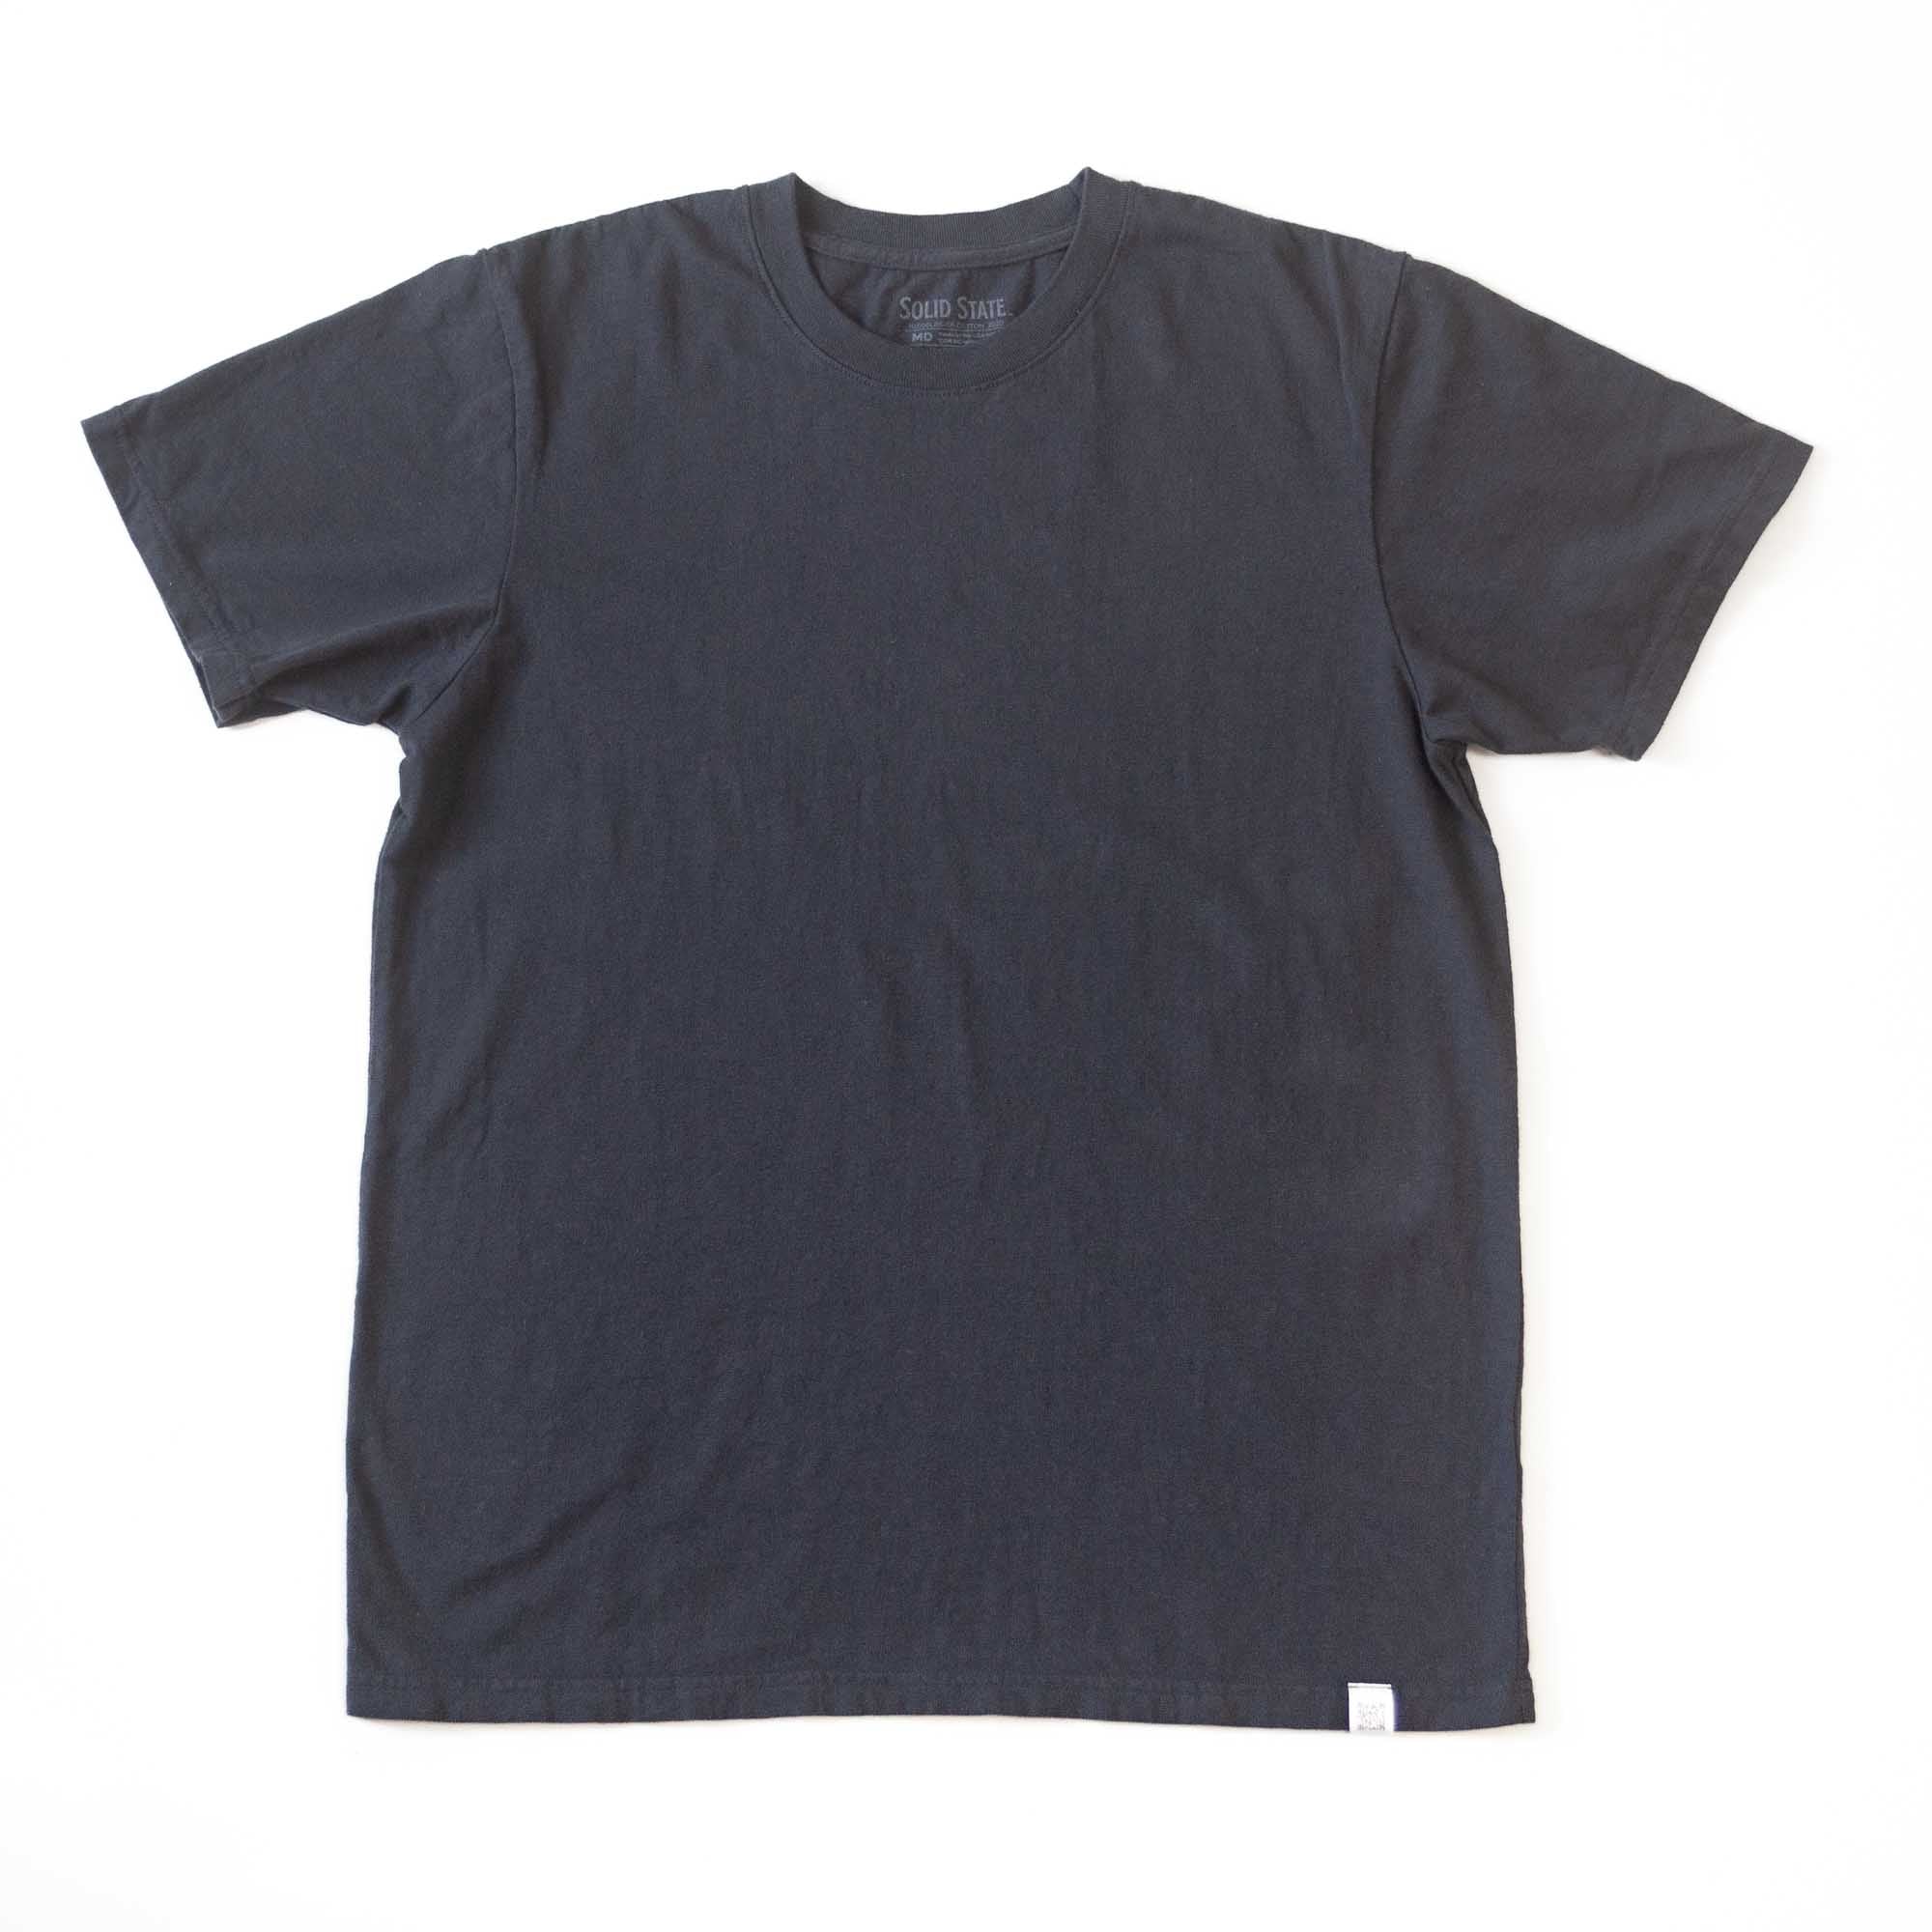 North Carolina Cotton T-Shirt - Soft Black